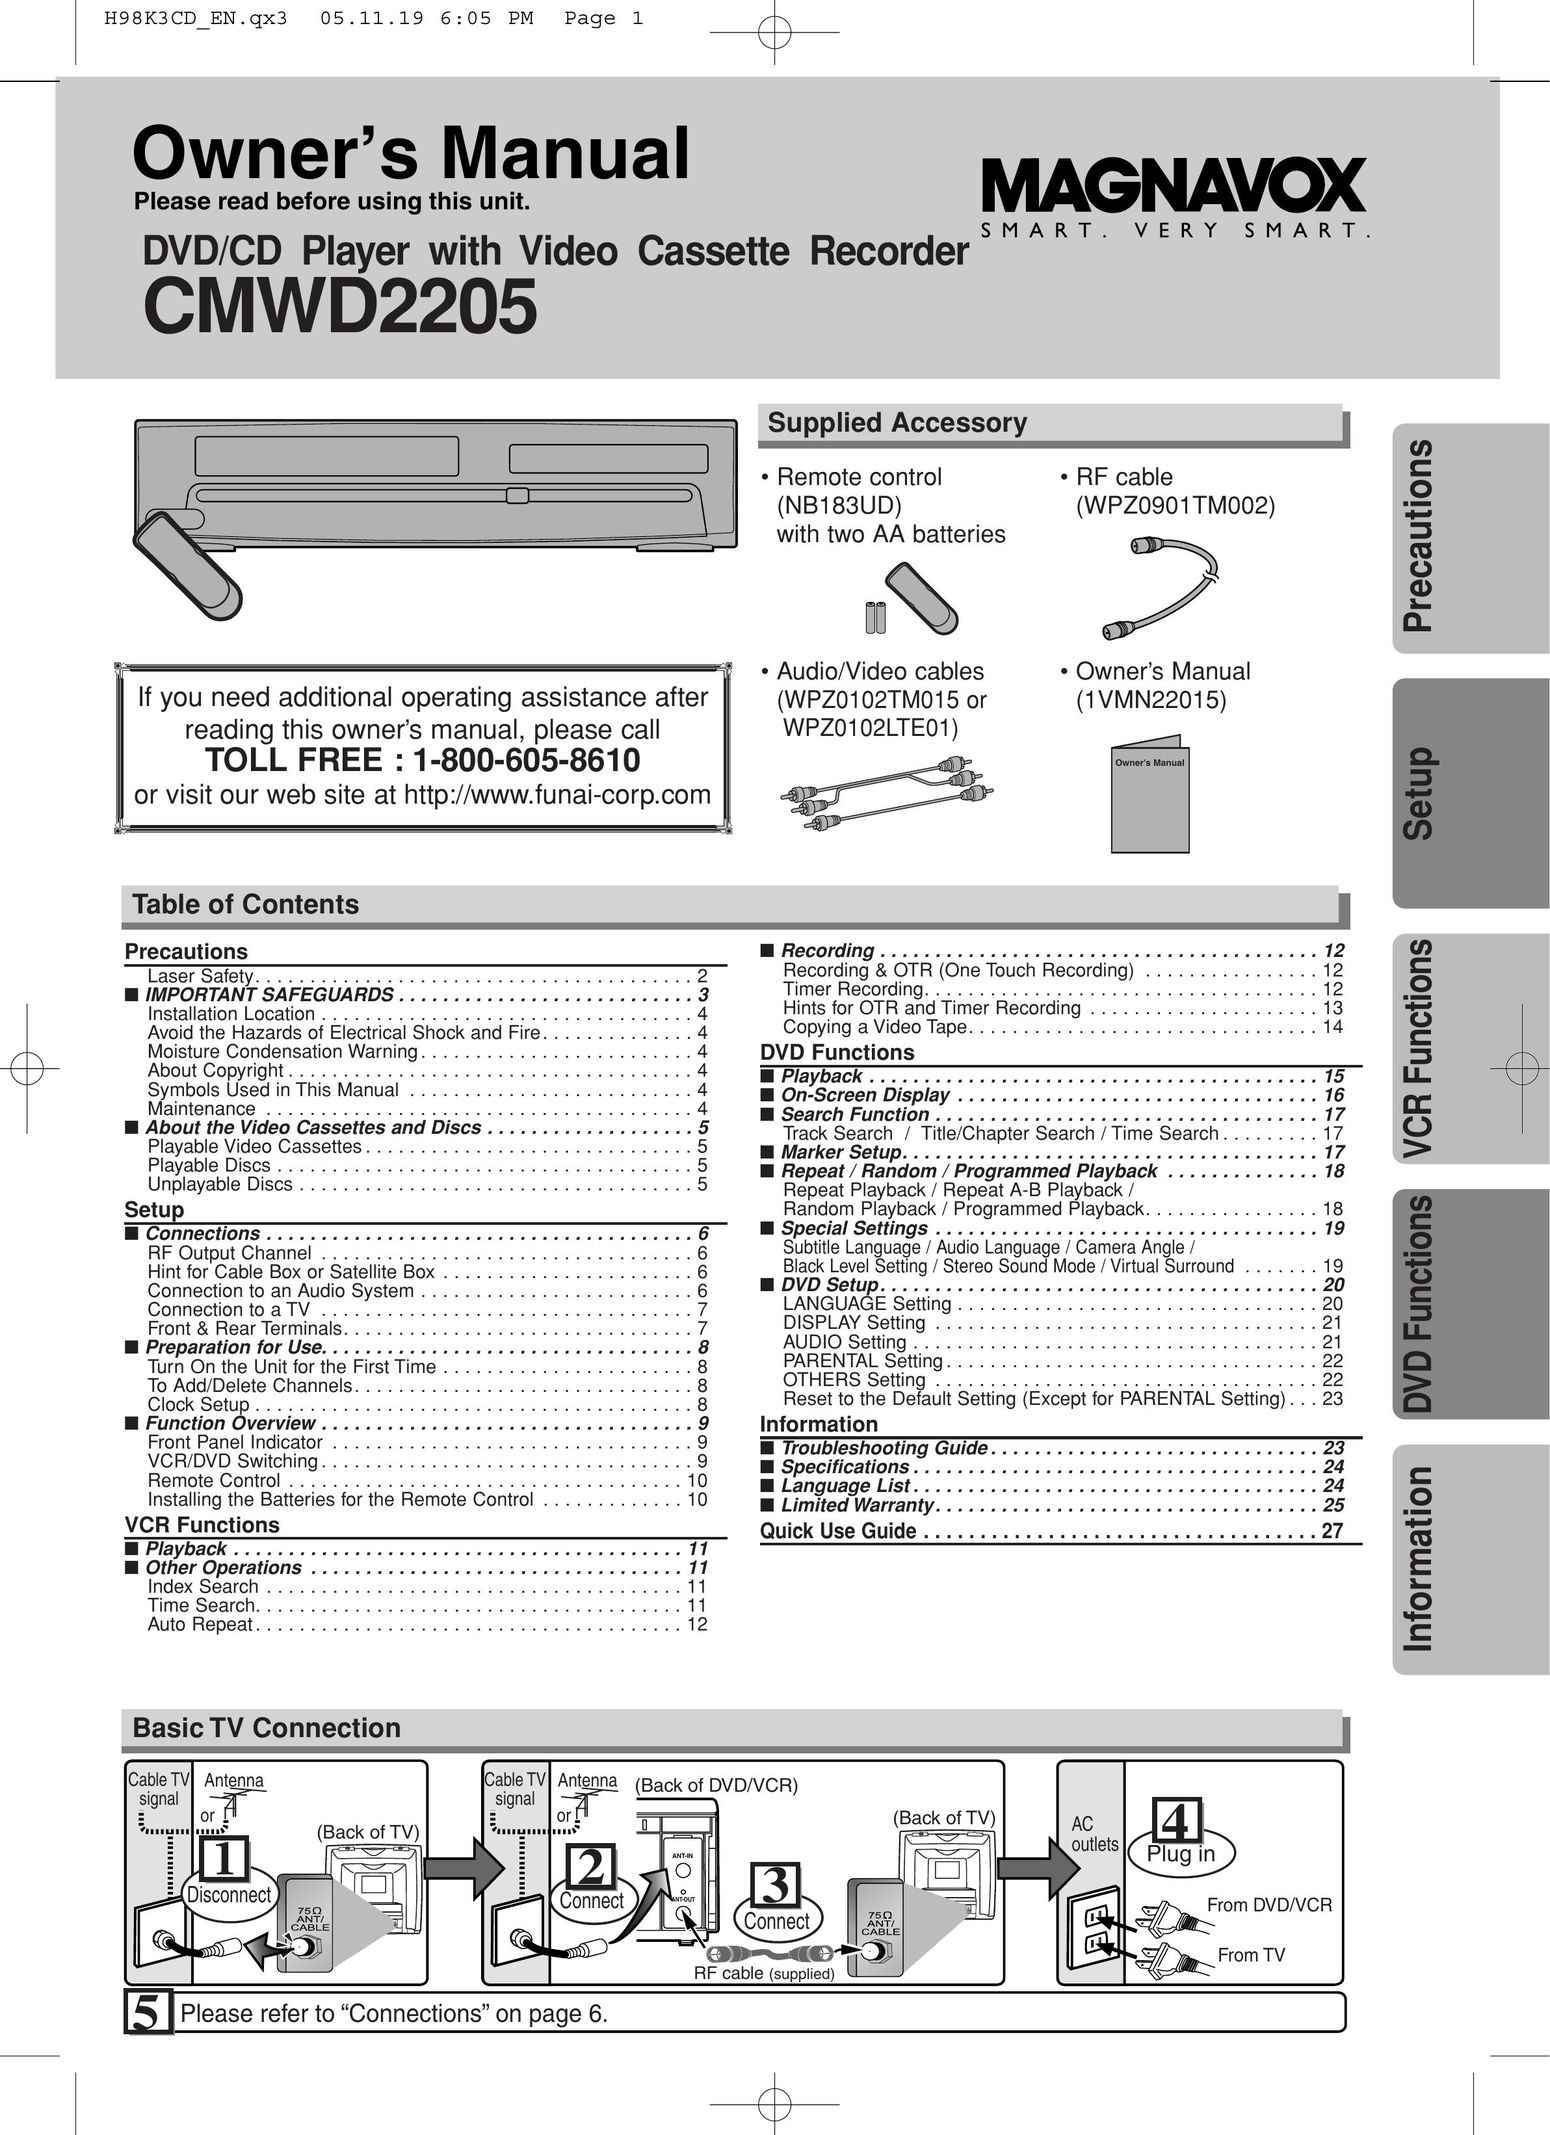 Magnavox CMWD2205 DVD VCR Combo User Manual